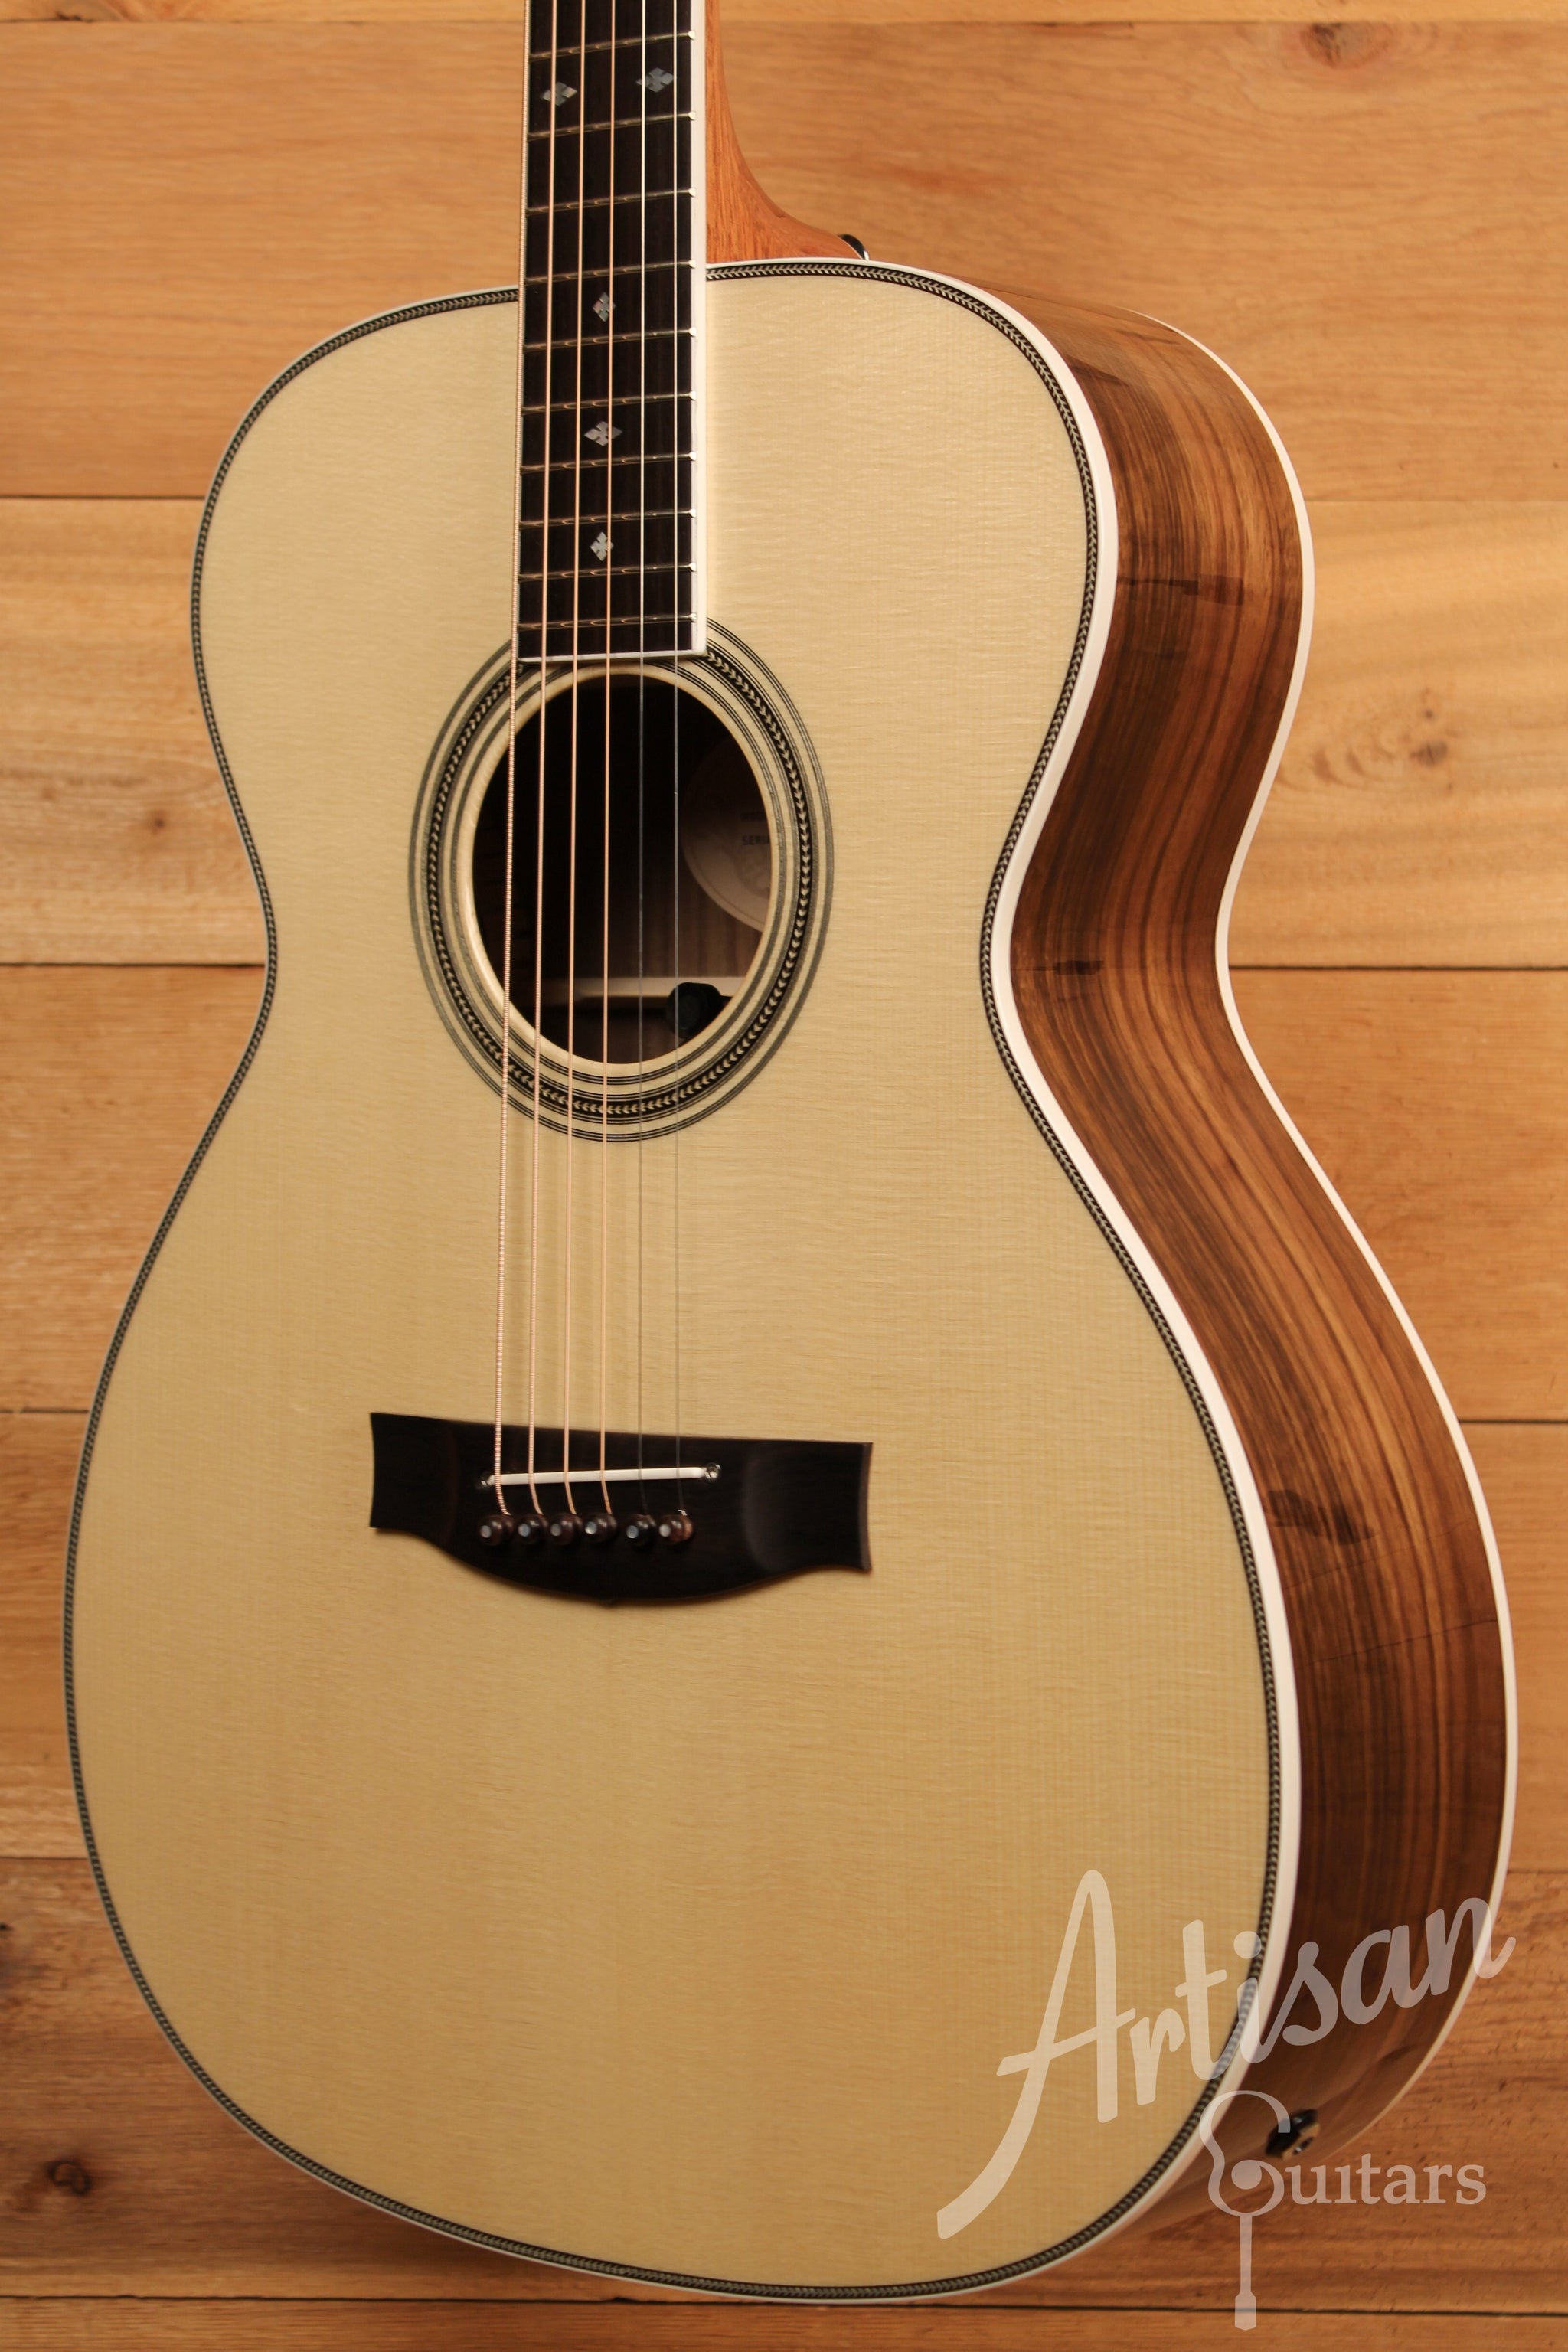 Maton Custom Shop Classic Guitar with European Spruce and Indian Rosewood ID-11740 - Artisan Guitars